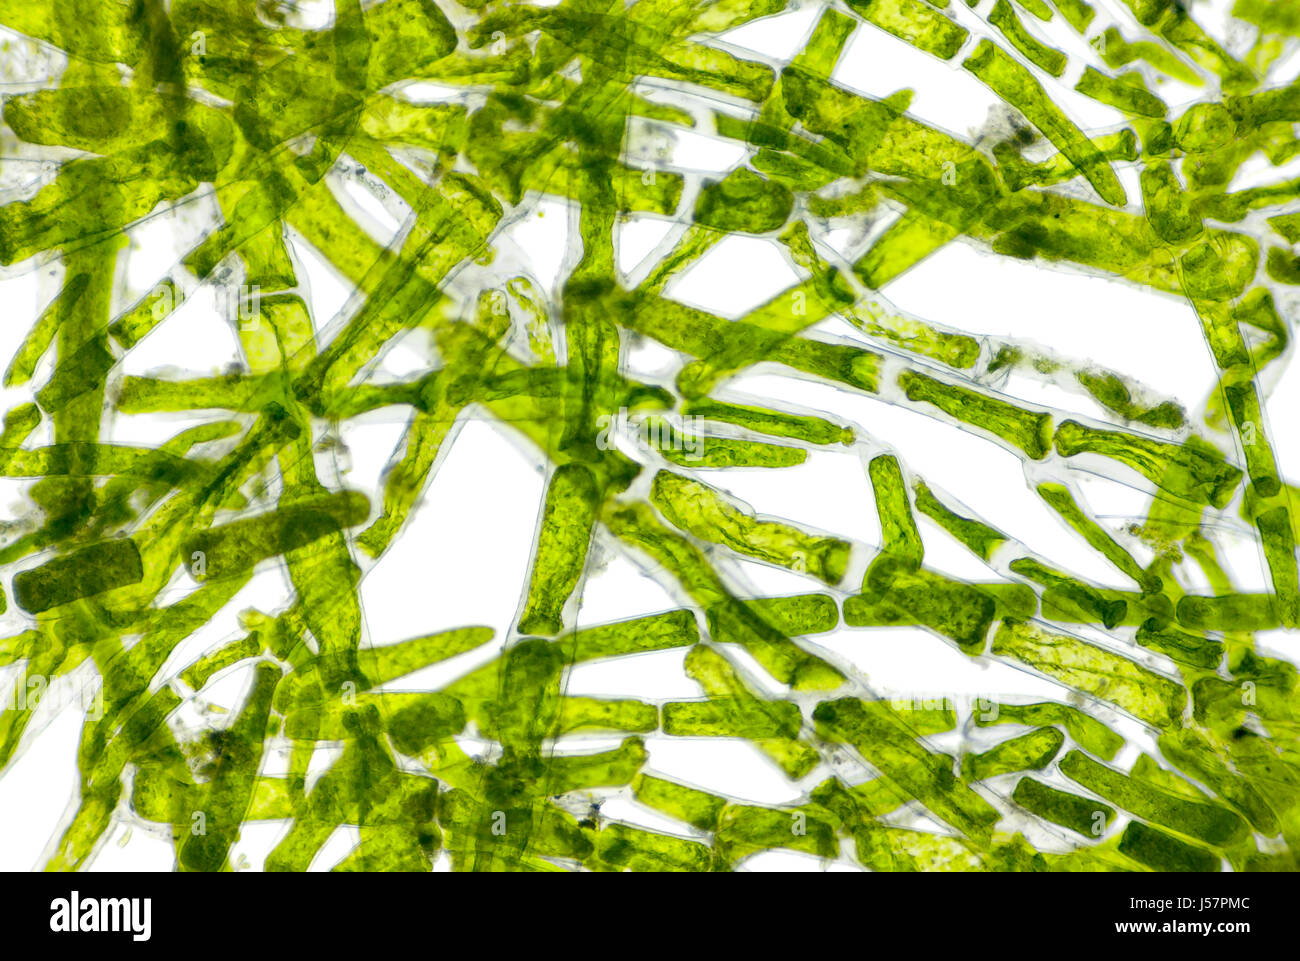 Microscopic view of green algae (Cladophora) cells. Brightfield illumination. Stock Photo